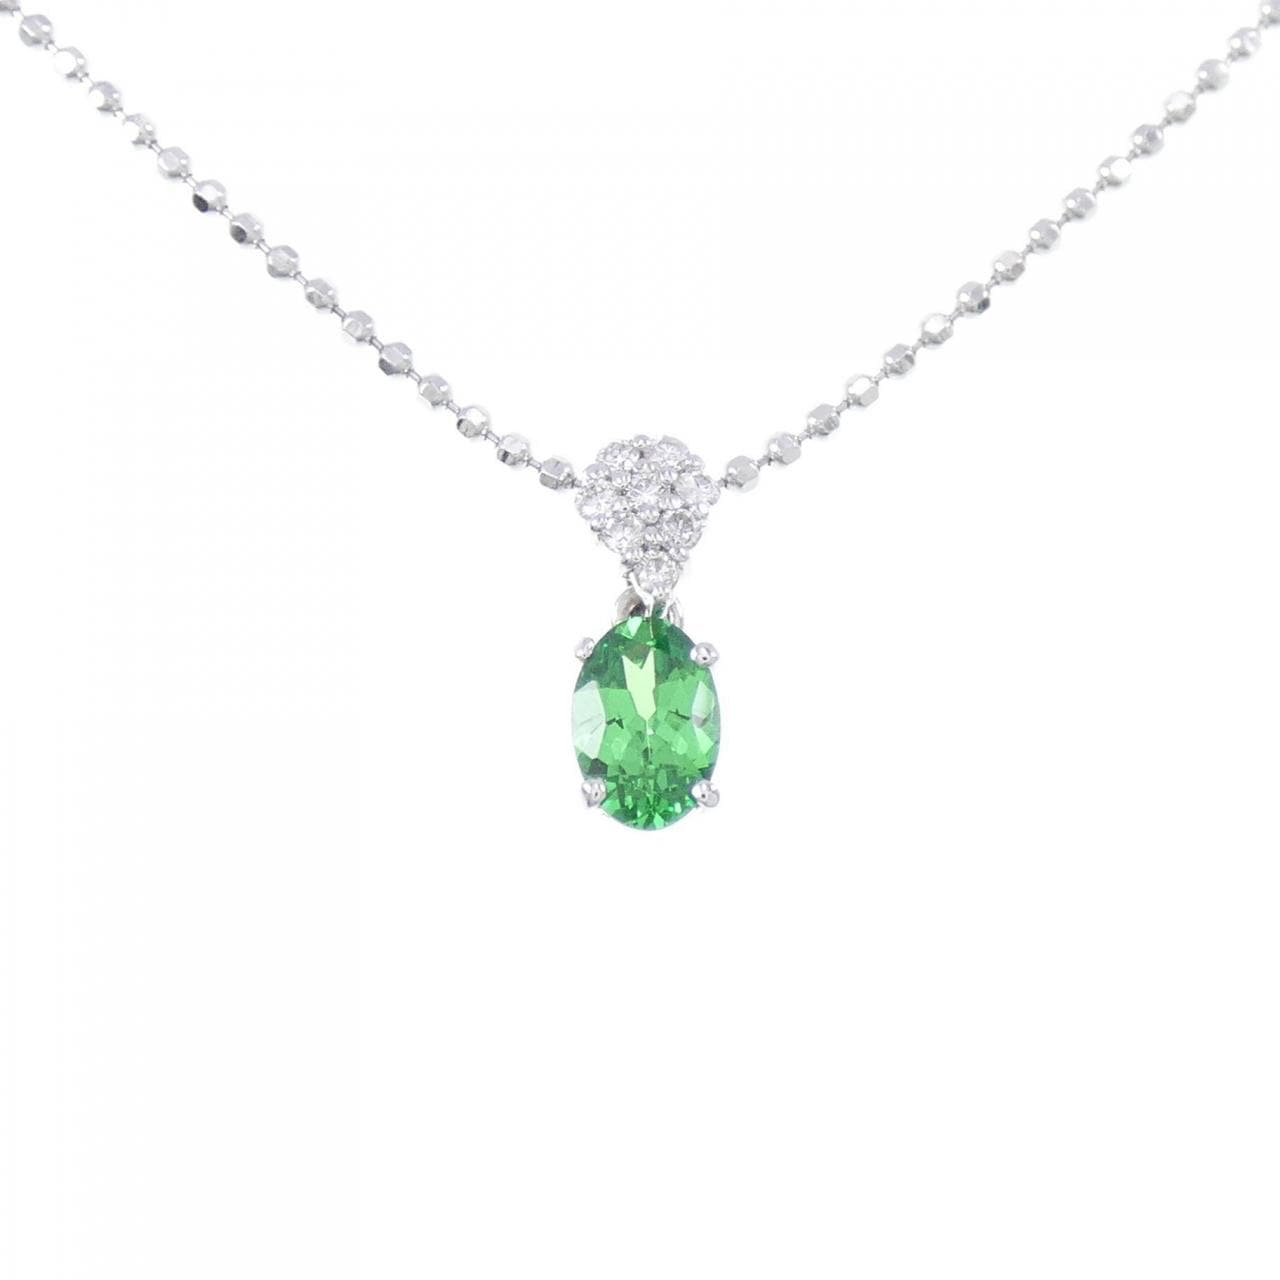 K18WG Garnet necklace 0.502CT